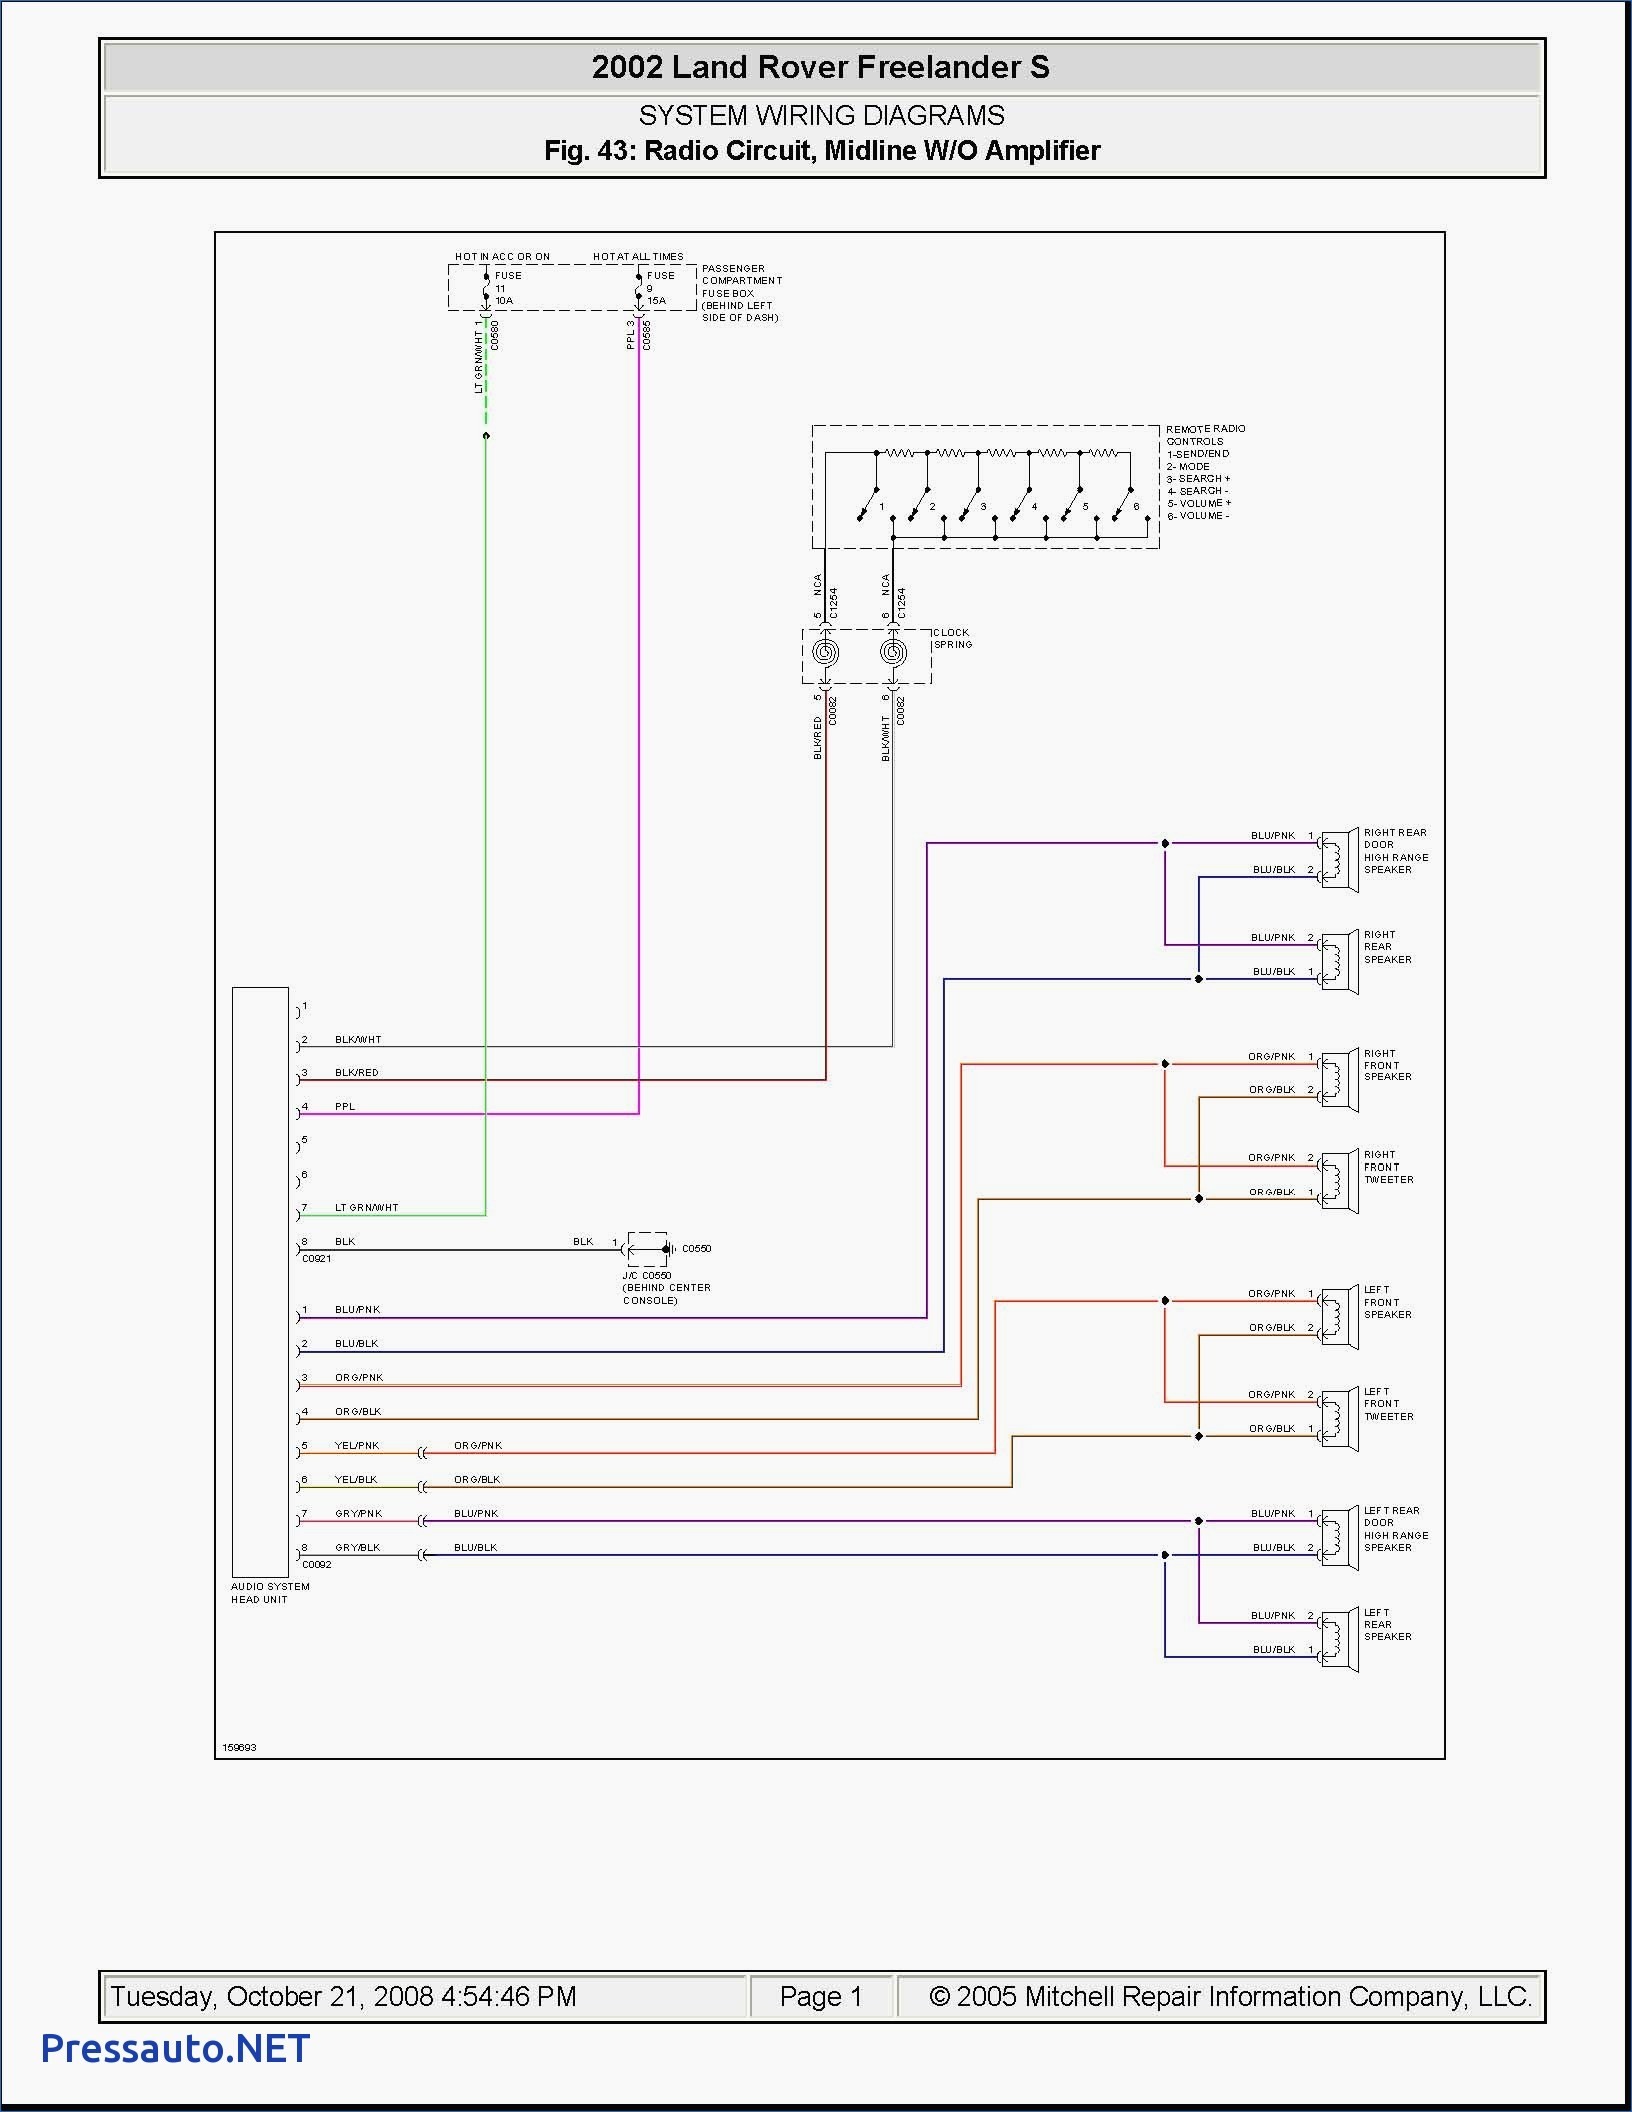 Exelent Gdm 35 True Wiring Diagram Mold Wiring Diagram Ideas